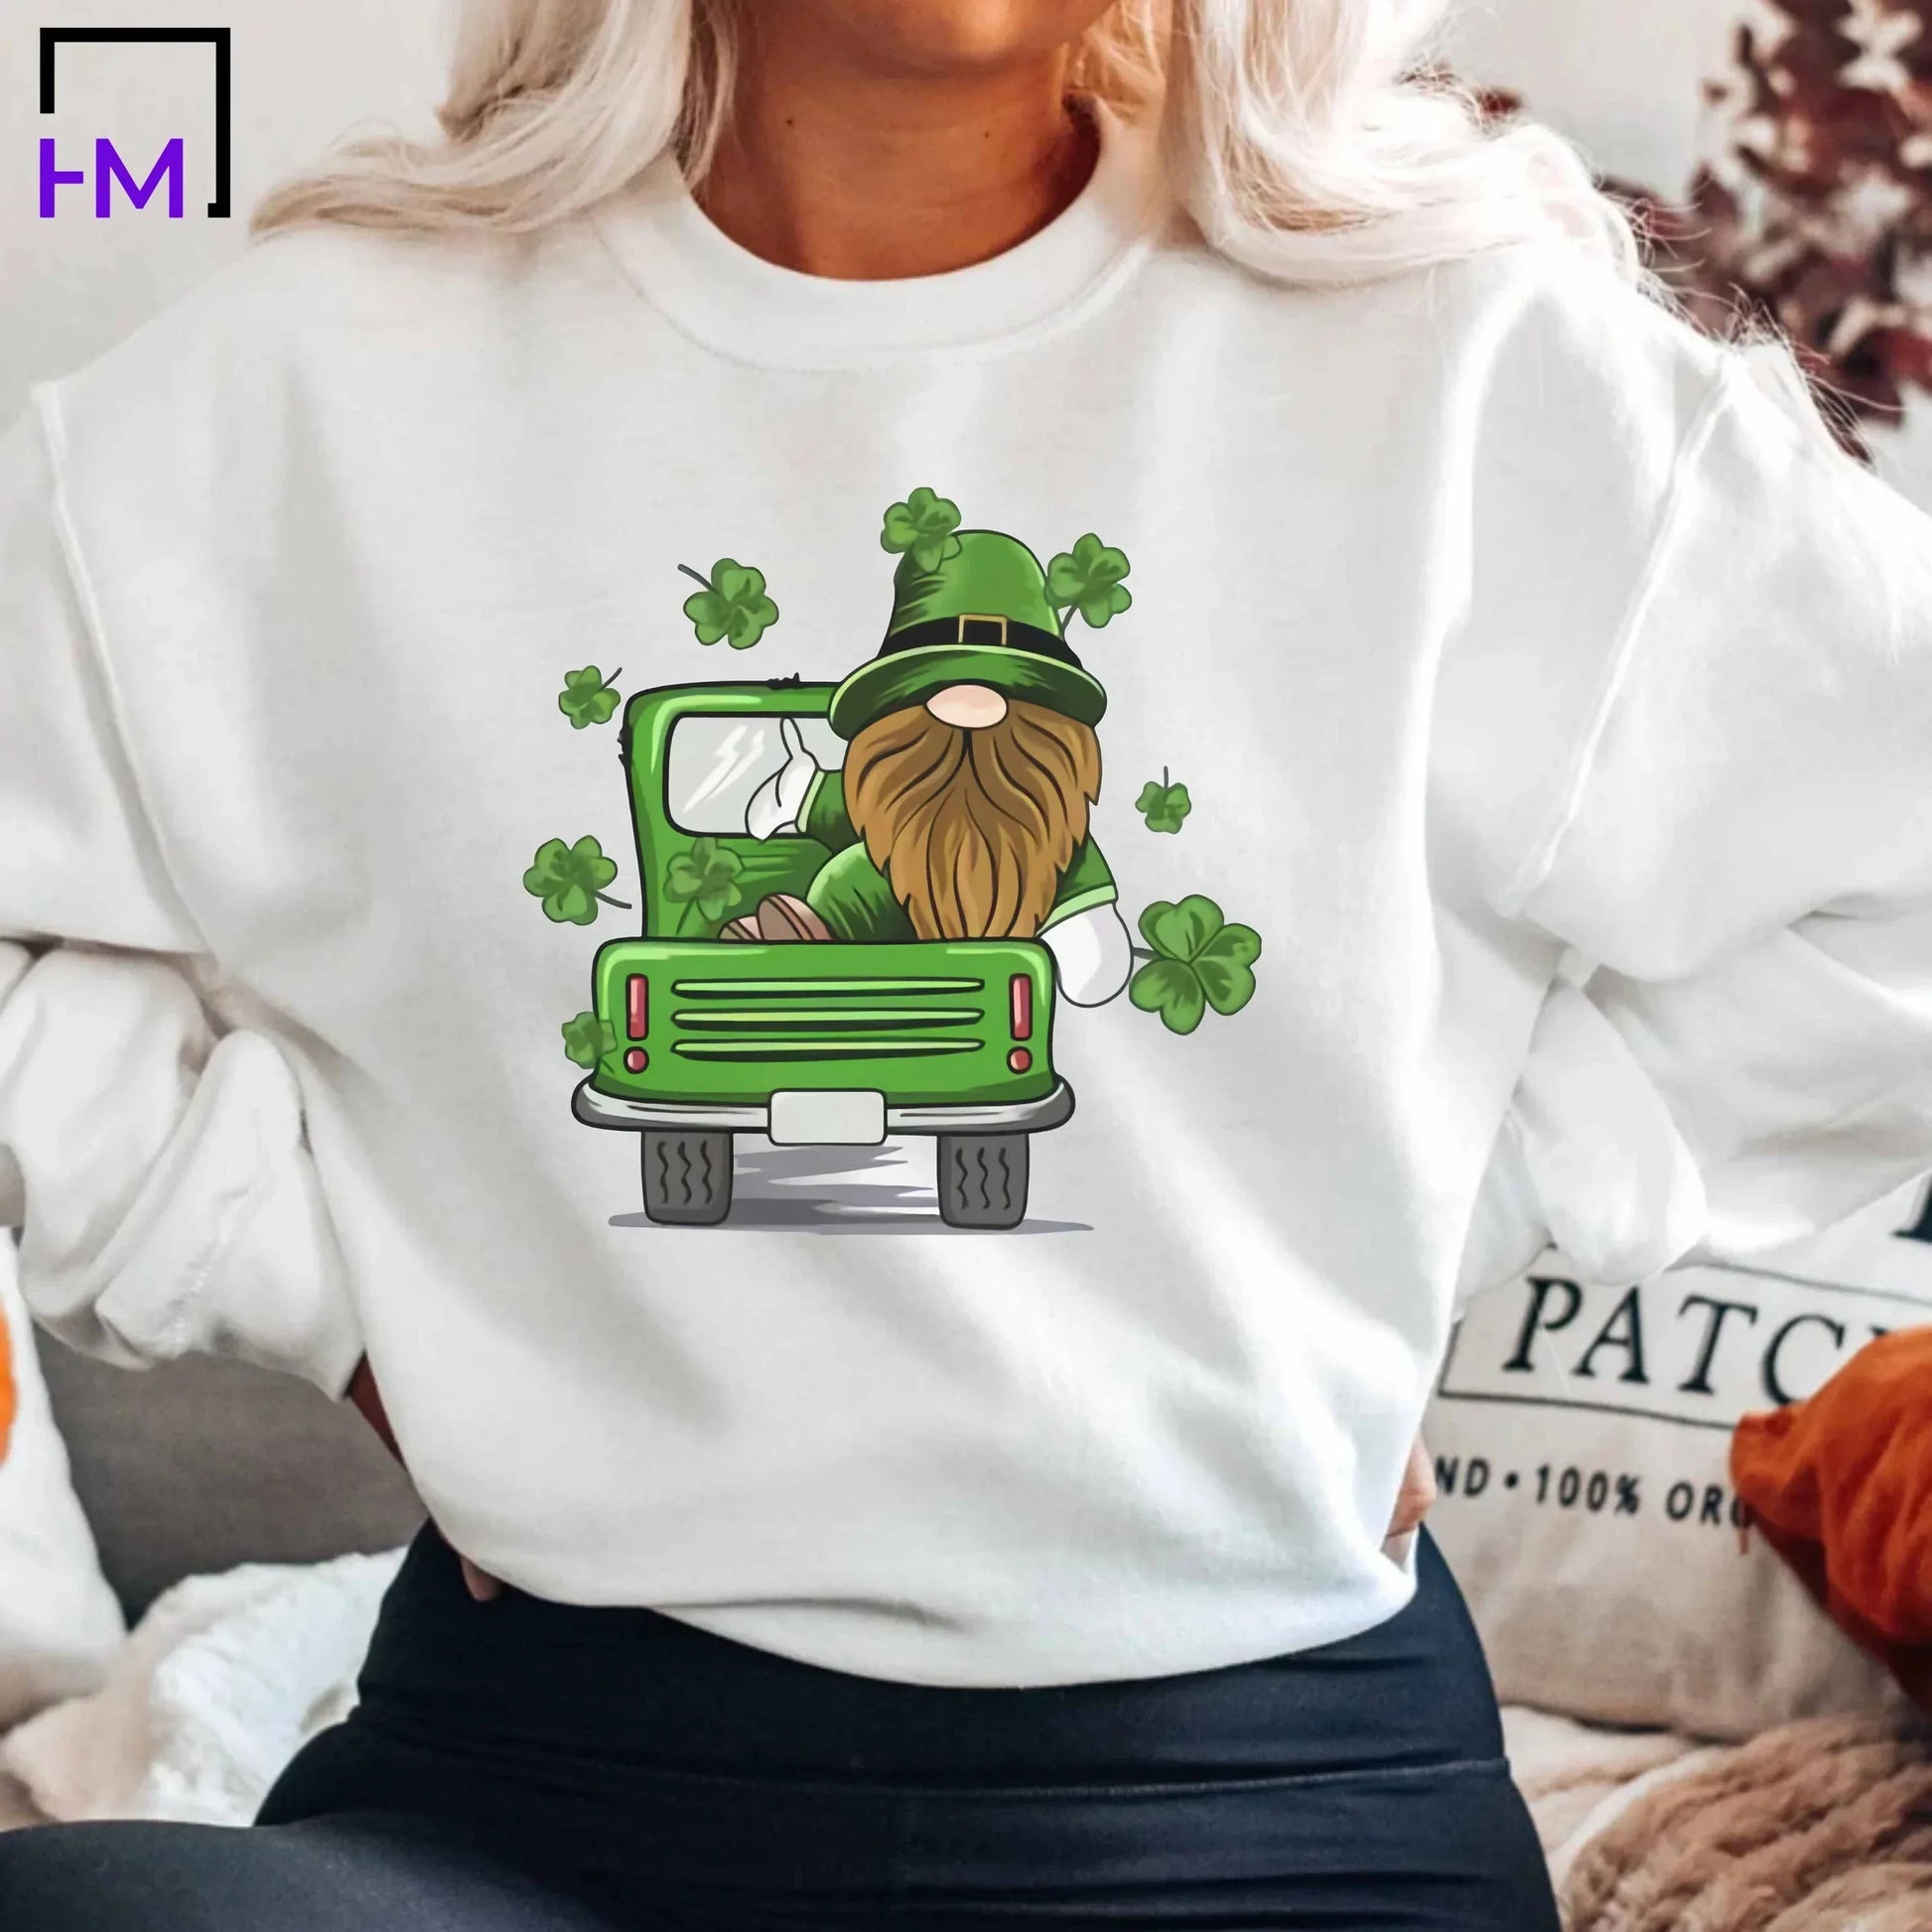 Gnome Shamrock Shirt, Irish Shirt Women, Cute Shamrock Shirt, Lucky Woman Shirt, Shamrock Clover Shirt, St Patrick Day Shirt, St. Pattys Day HMDesignStudioUS